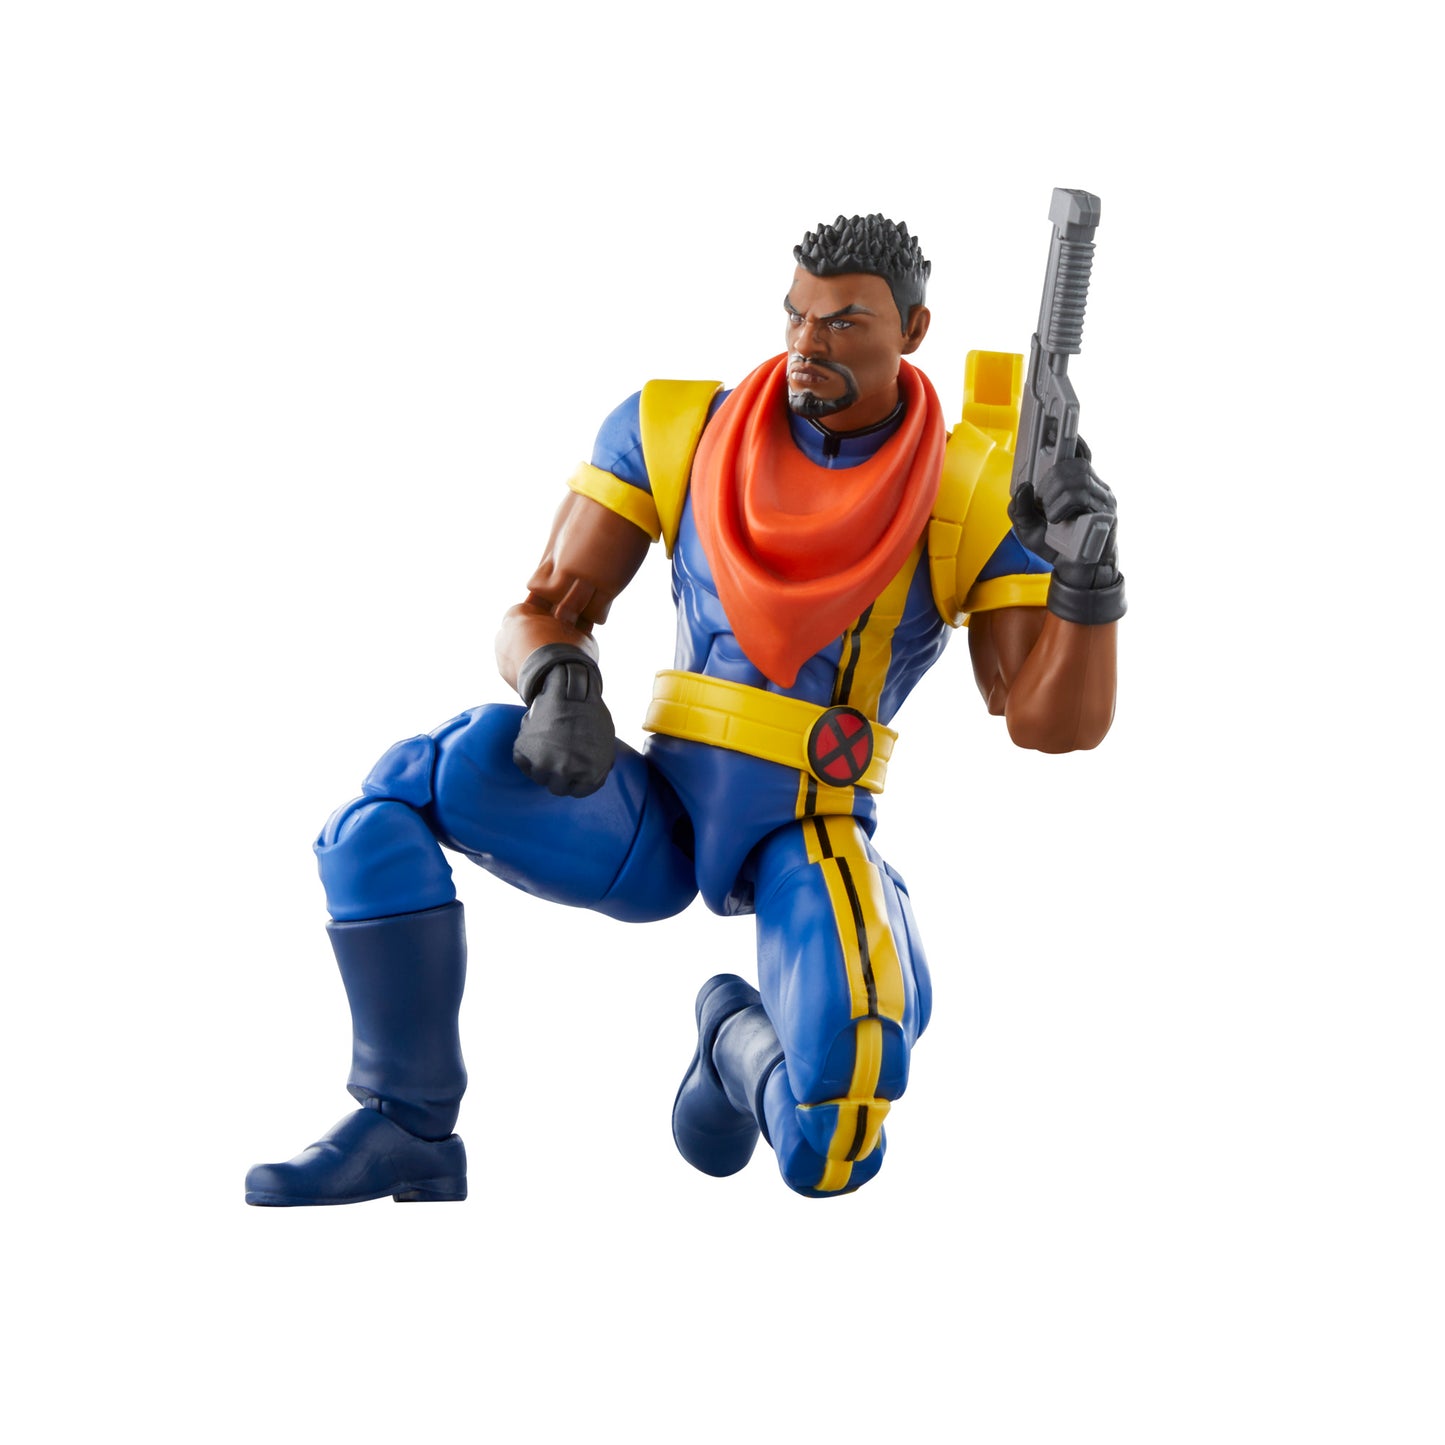 Marvel Legends Series Marvel’s Bishop Action Figure Toy with gun opsed - Heretoserveyou